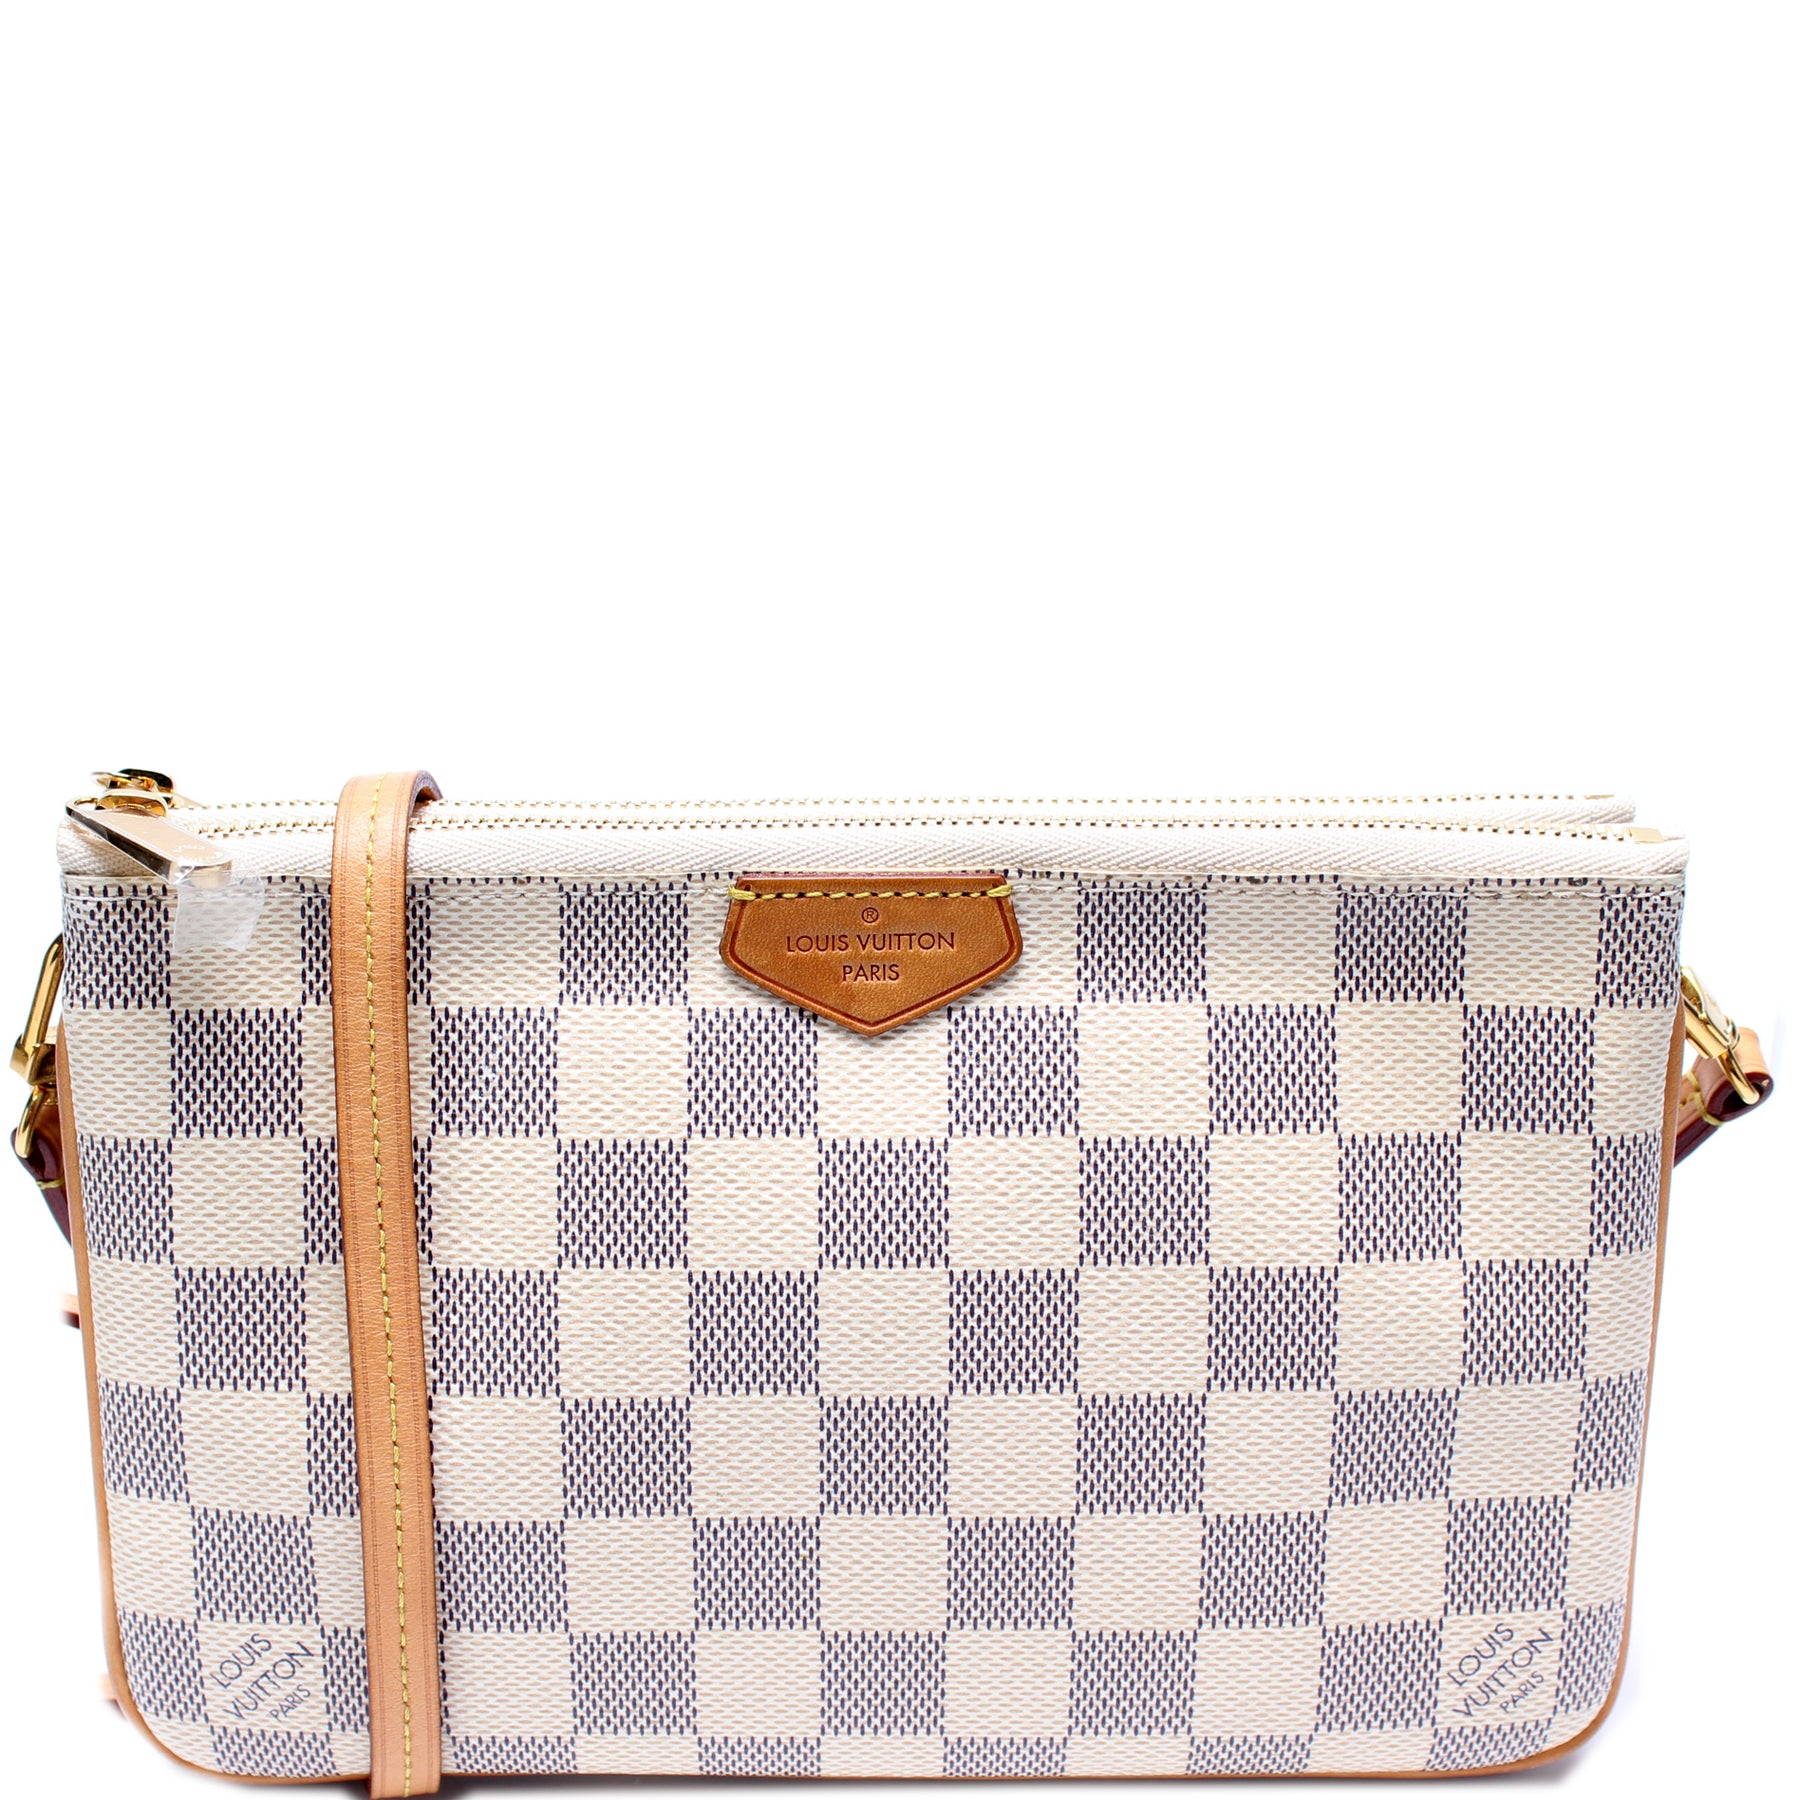 Buy Louis Vuitton Pochette Double Zip Crossbody Bags Purse Handbags at